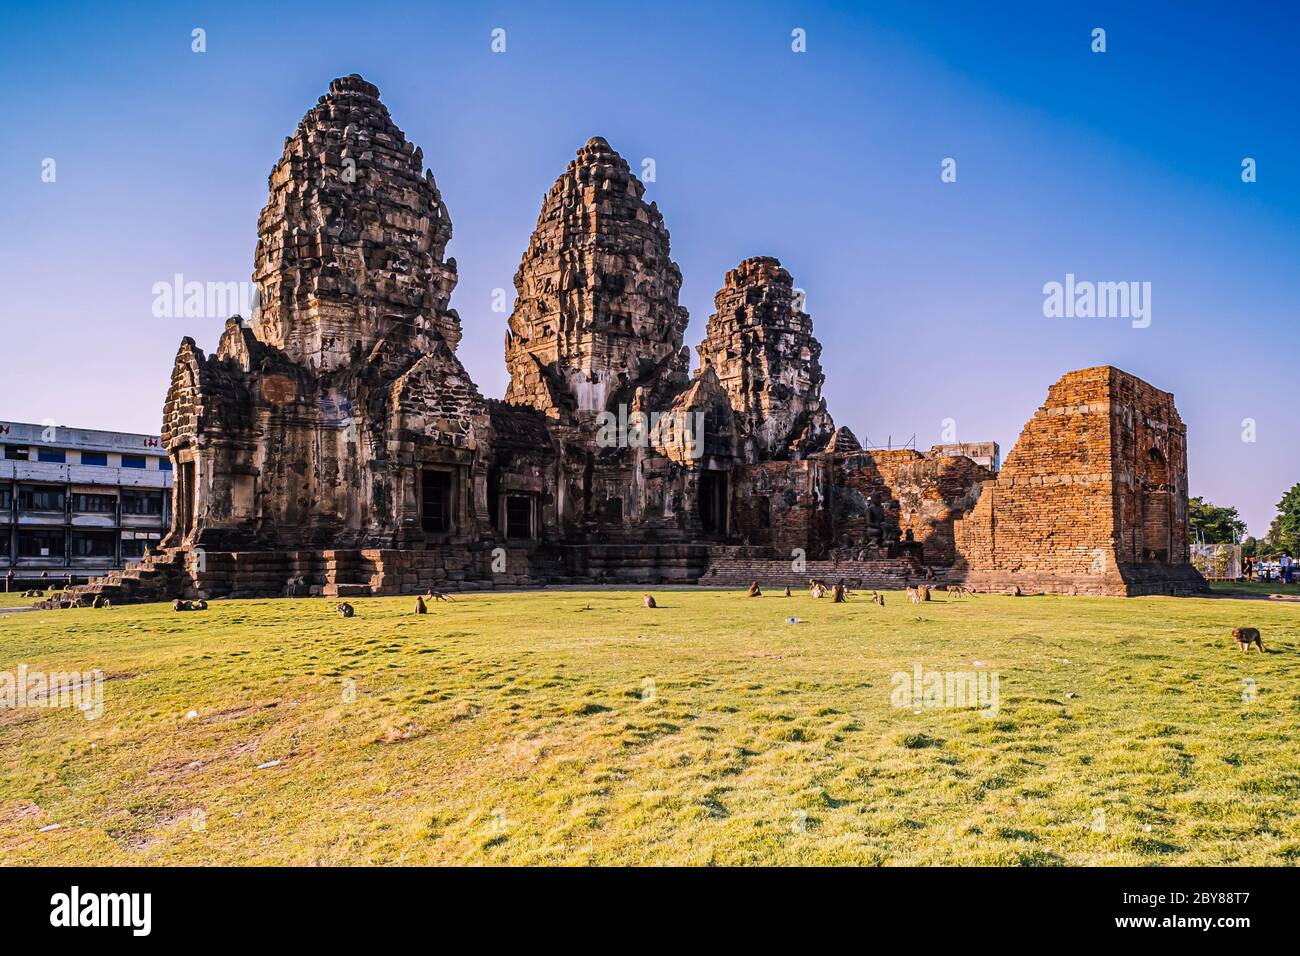 Lopburi Affentempel in Thailand. Phra Prang Sam Yot Tempel mit Affen, alte Architektur in Lopburi, Thailand. Stockfoto